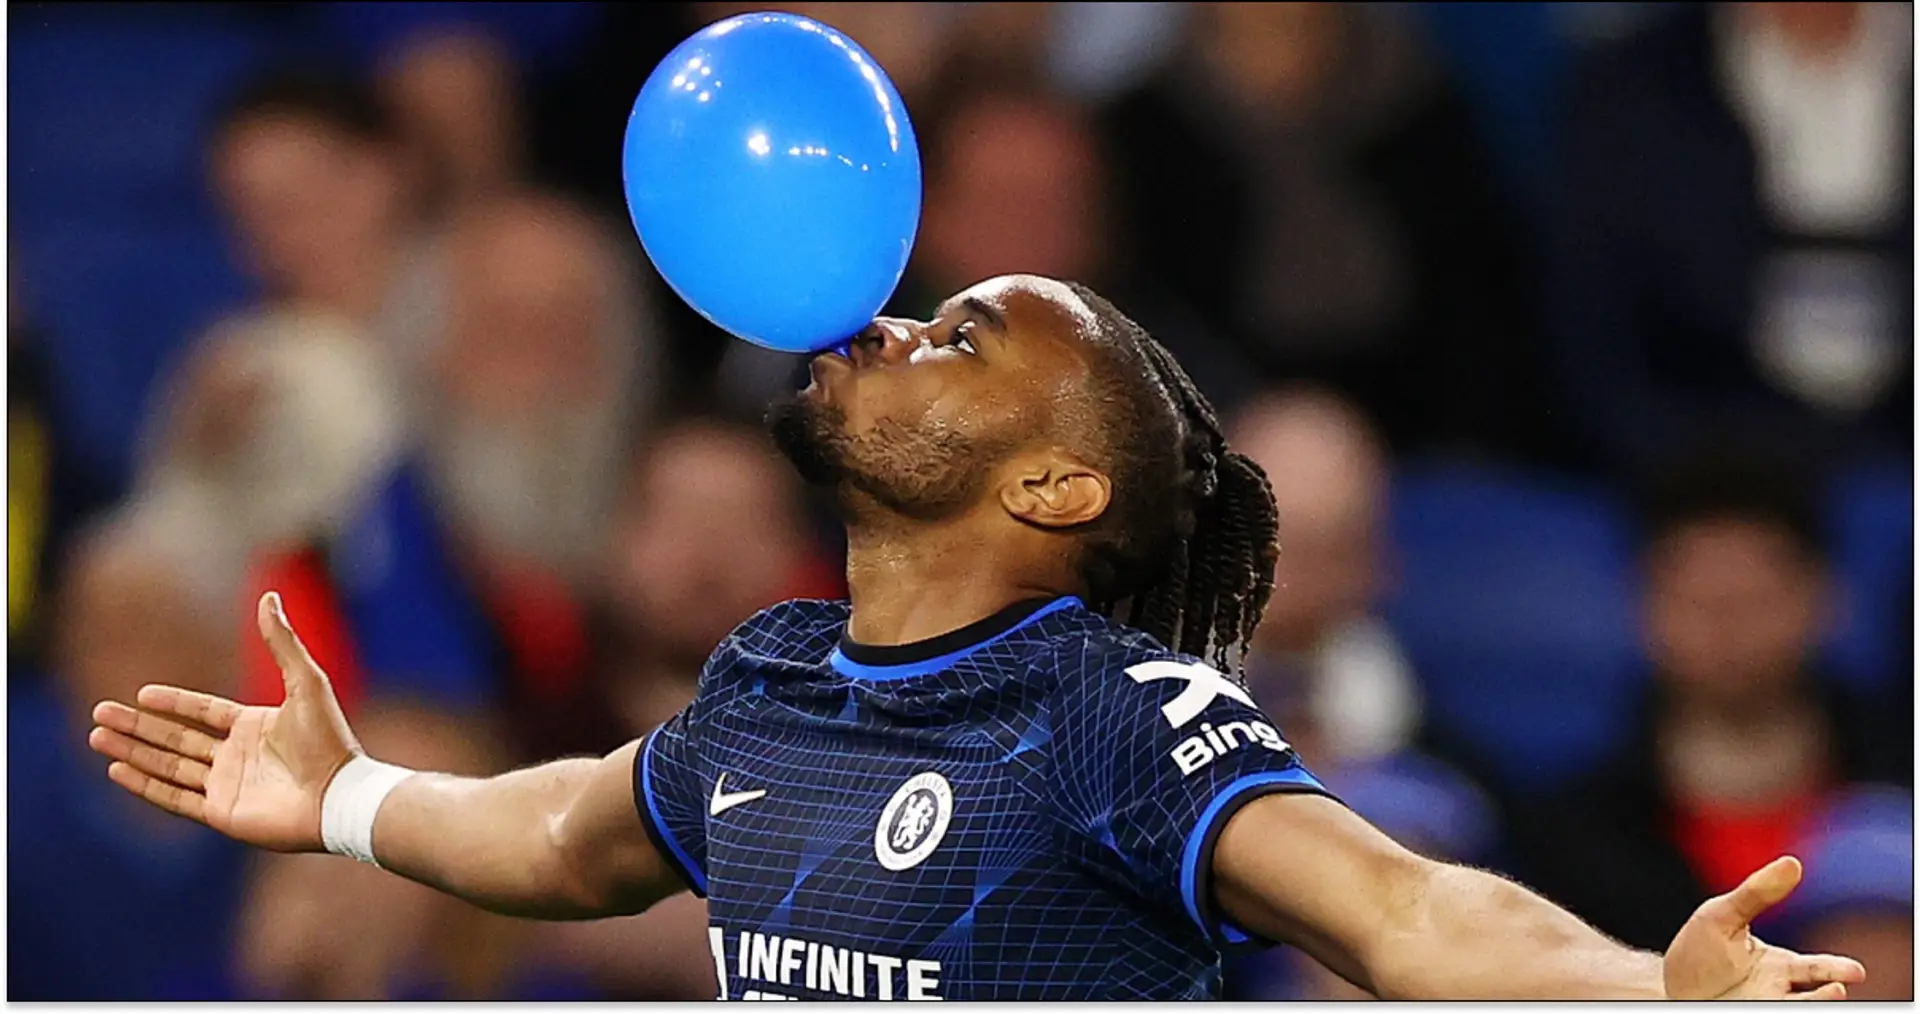 Nkunku hits trademark balloon celebration after scoring v Brighton